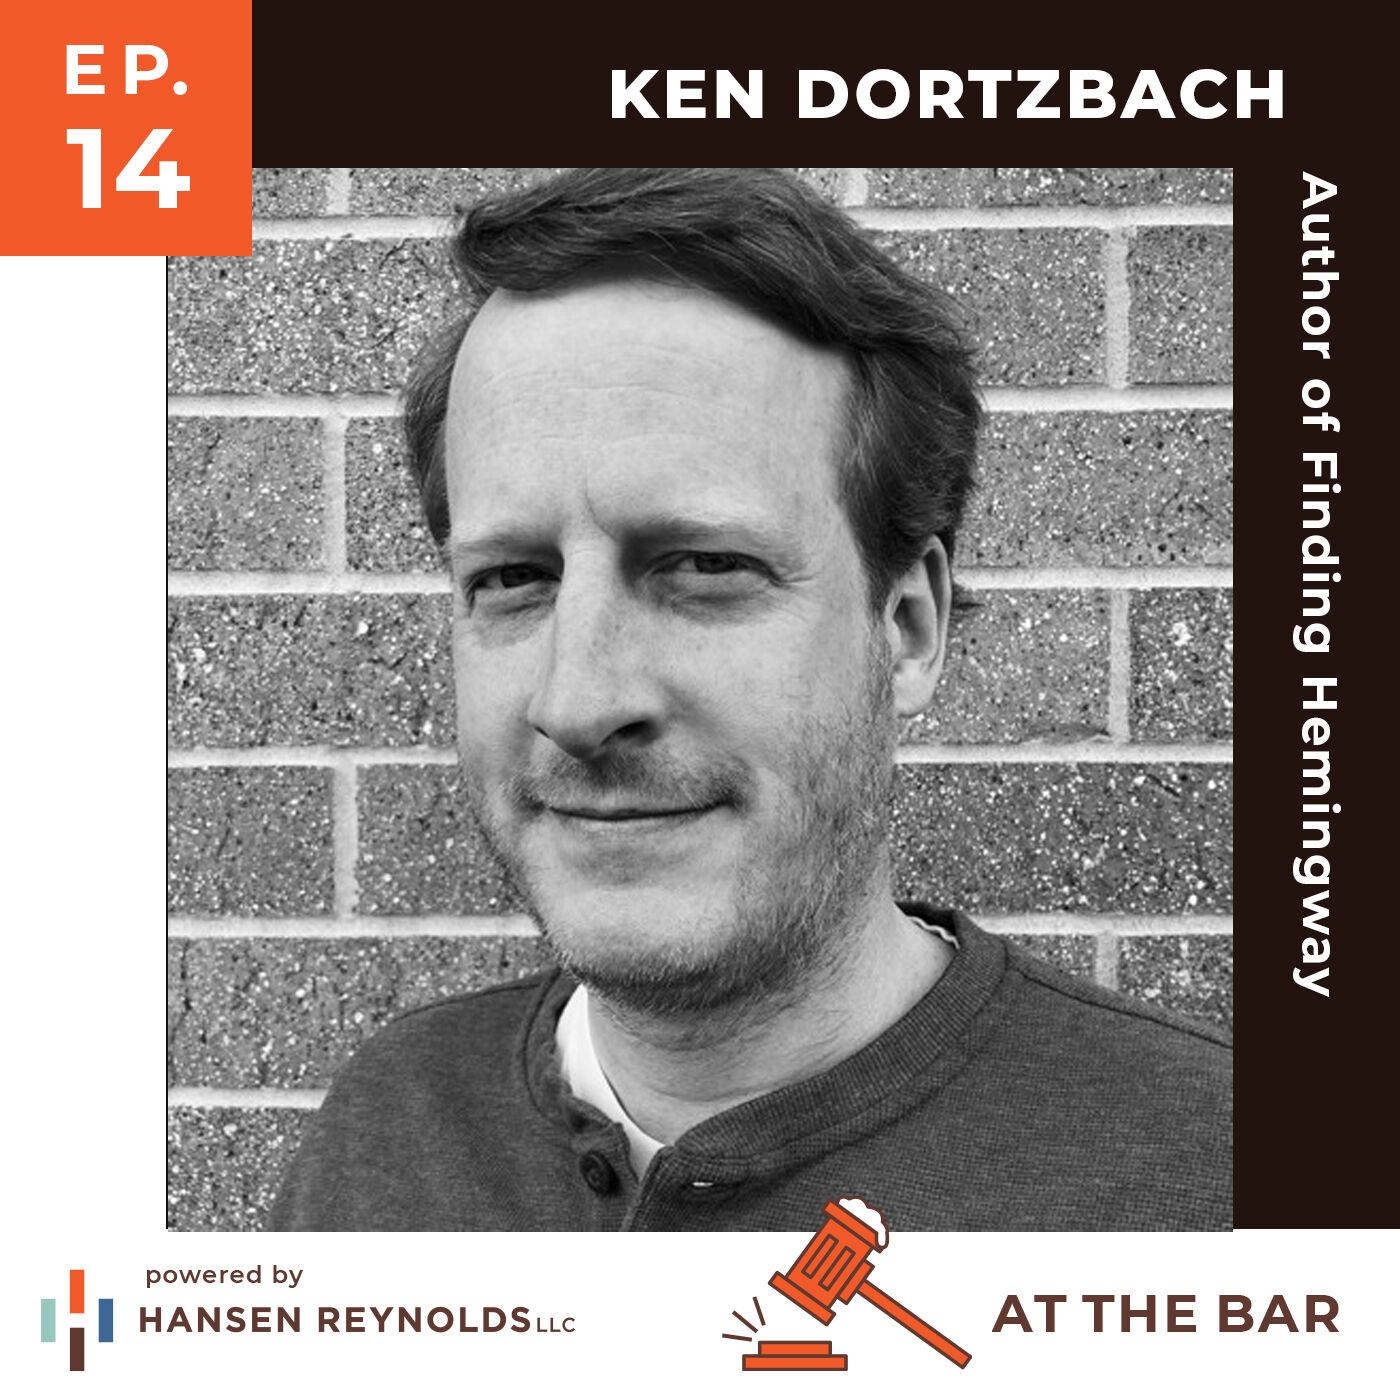 At the Bar episode fourteen cover with Ken Dortzbach